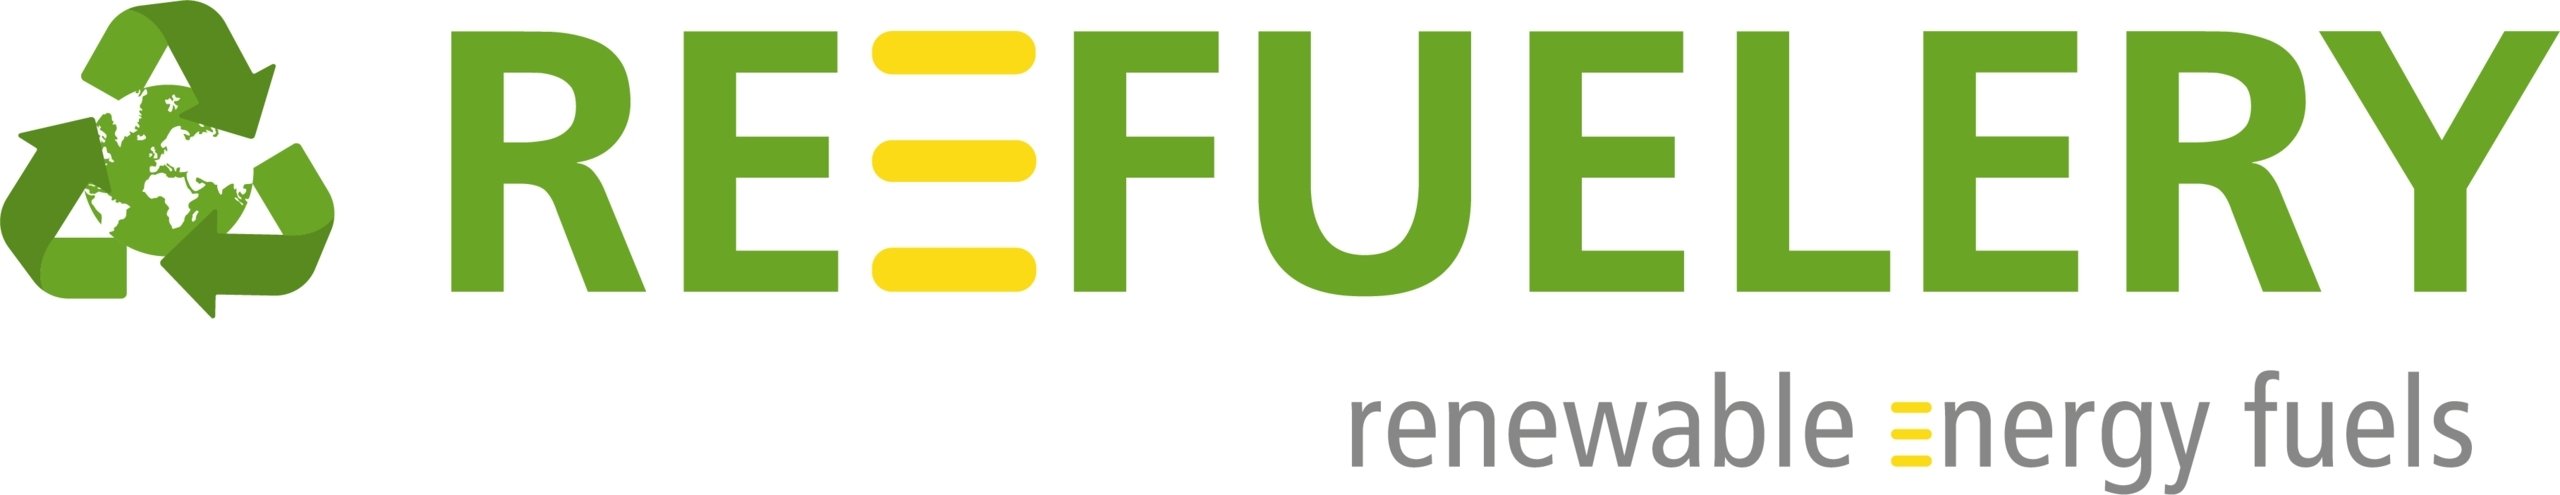 Reefuelery Logo